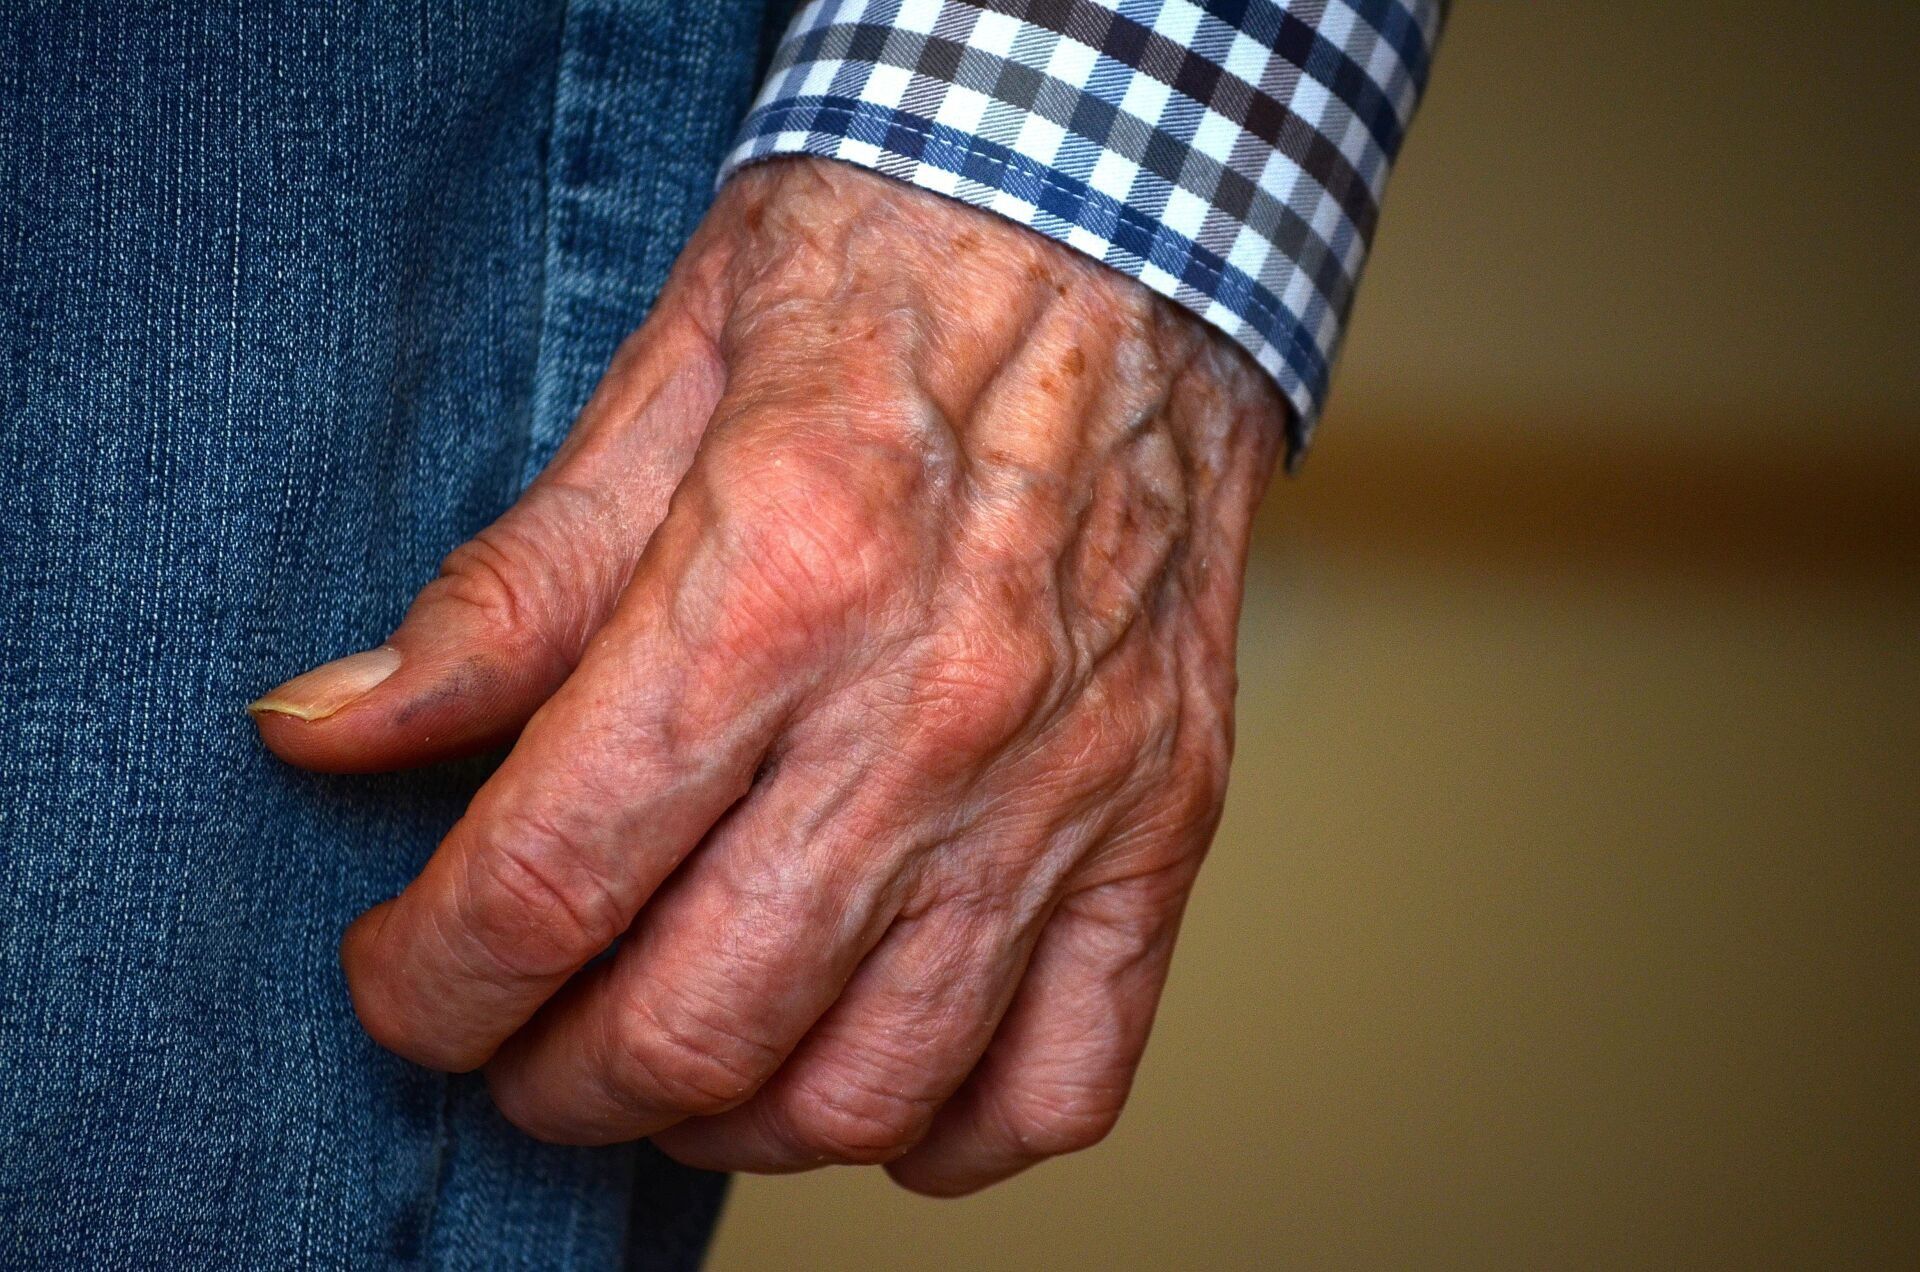 An elderly man's hand with severe arthritis.